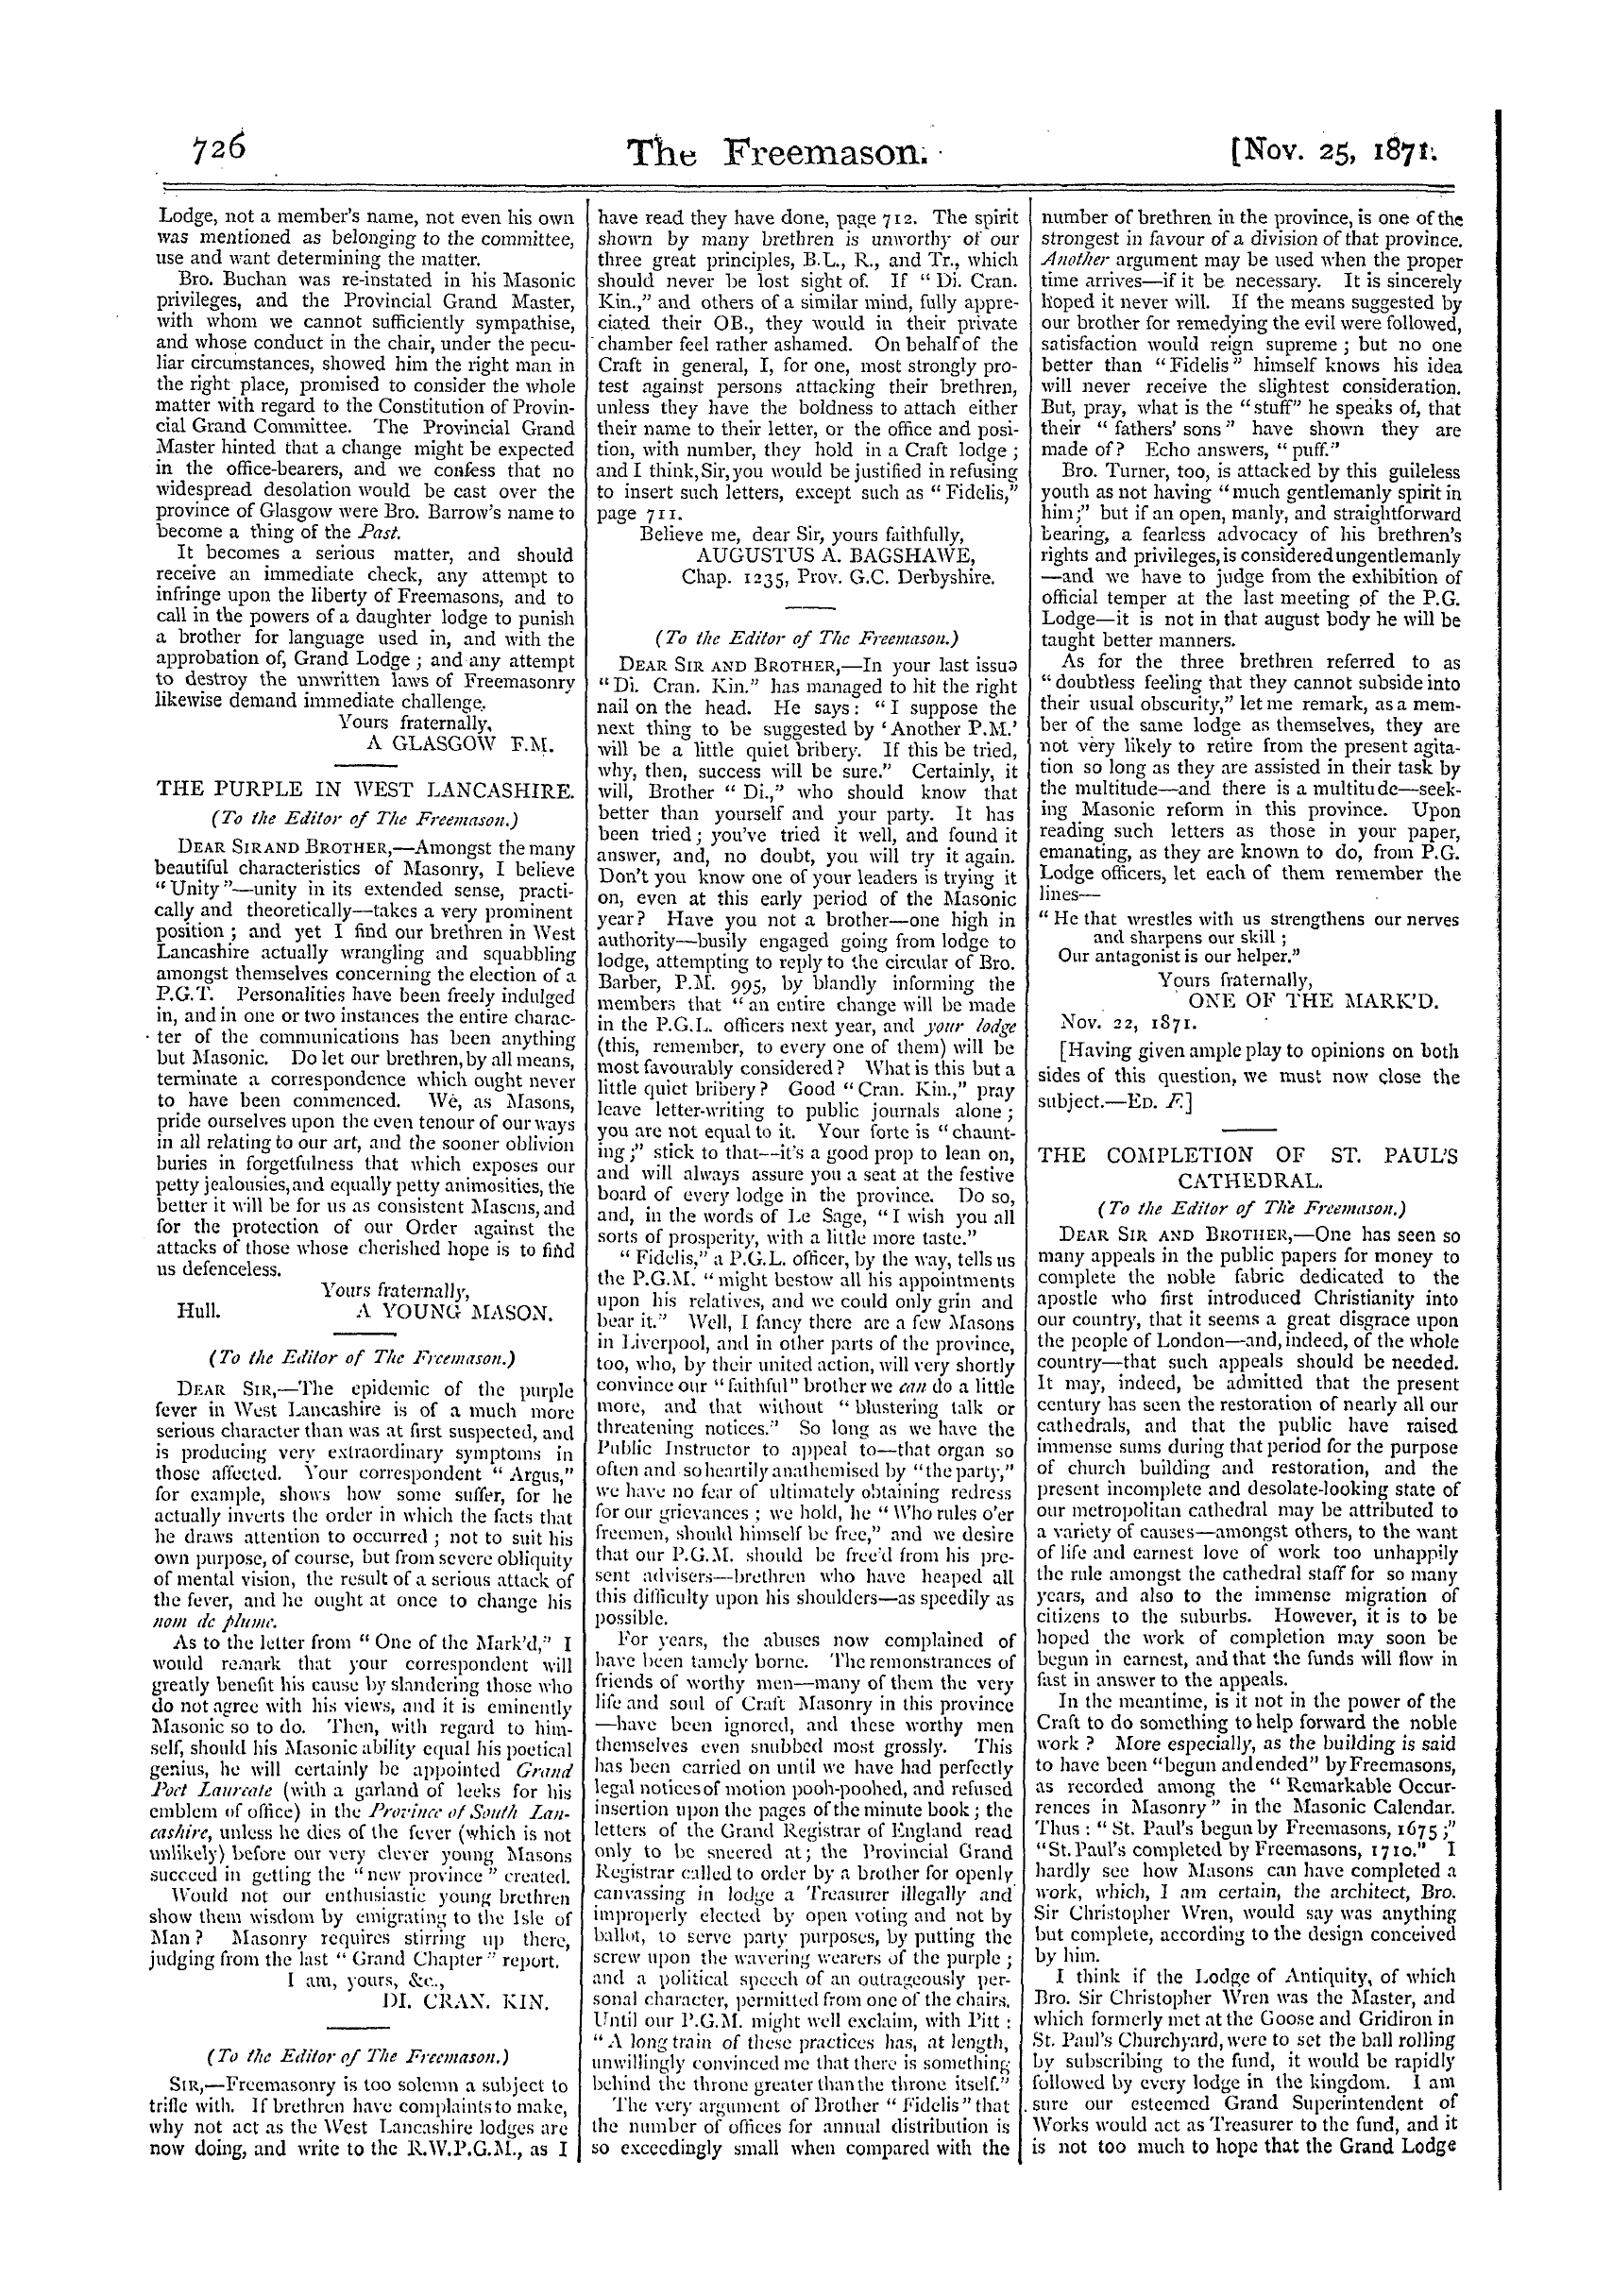 The Freemason: 1871-11-25: 8